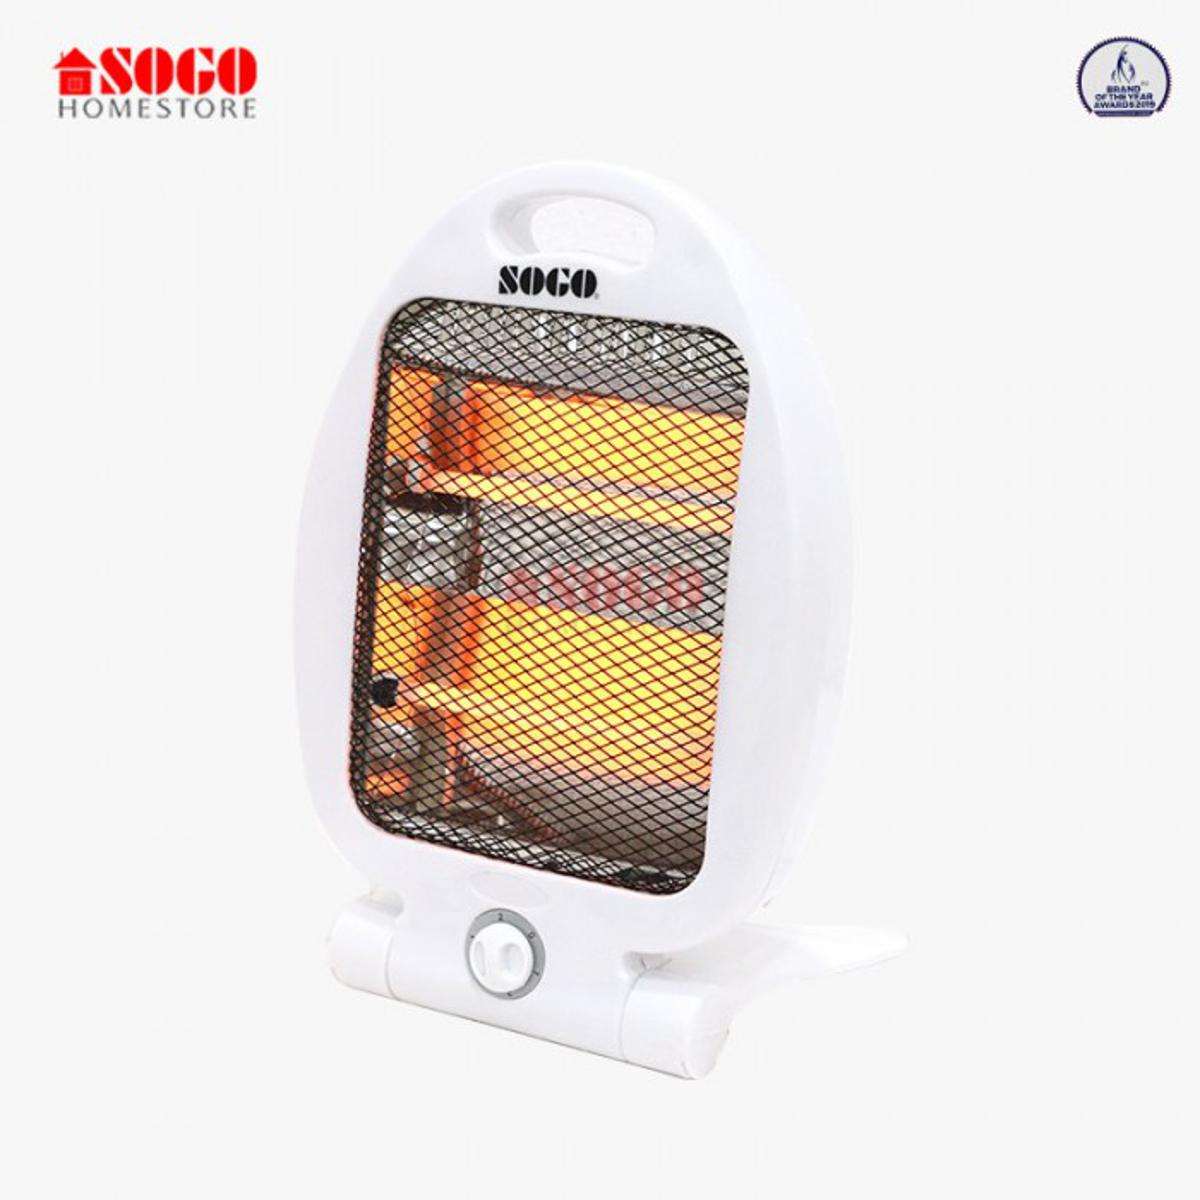 Sogo Quartz Heater (JPN-94) 2 HEATING SETTING: 400W & 800W VOLTAGE : 220-240V